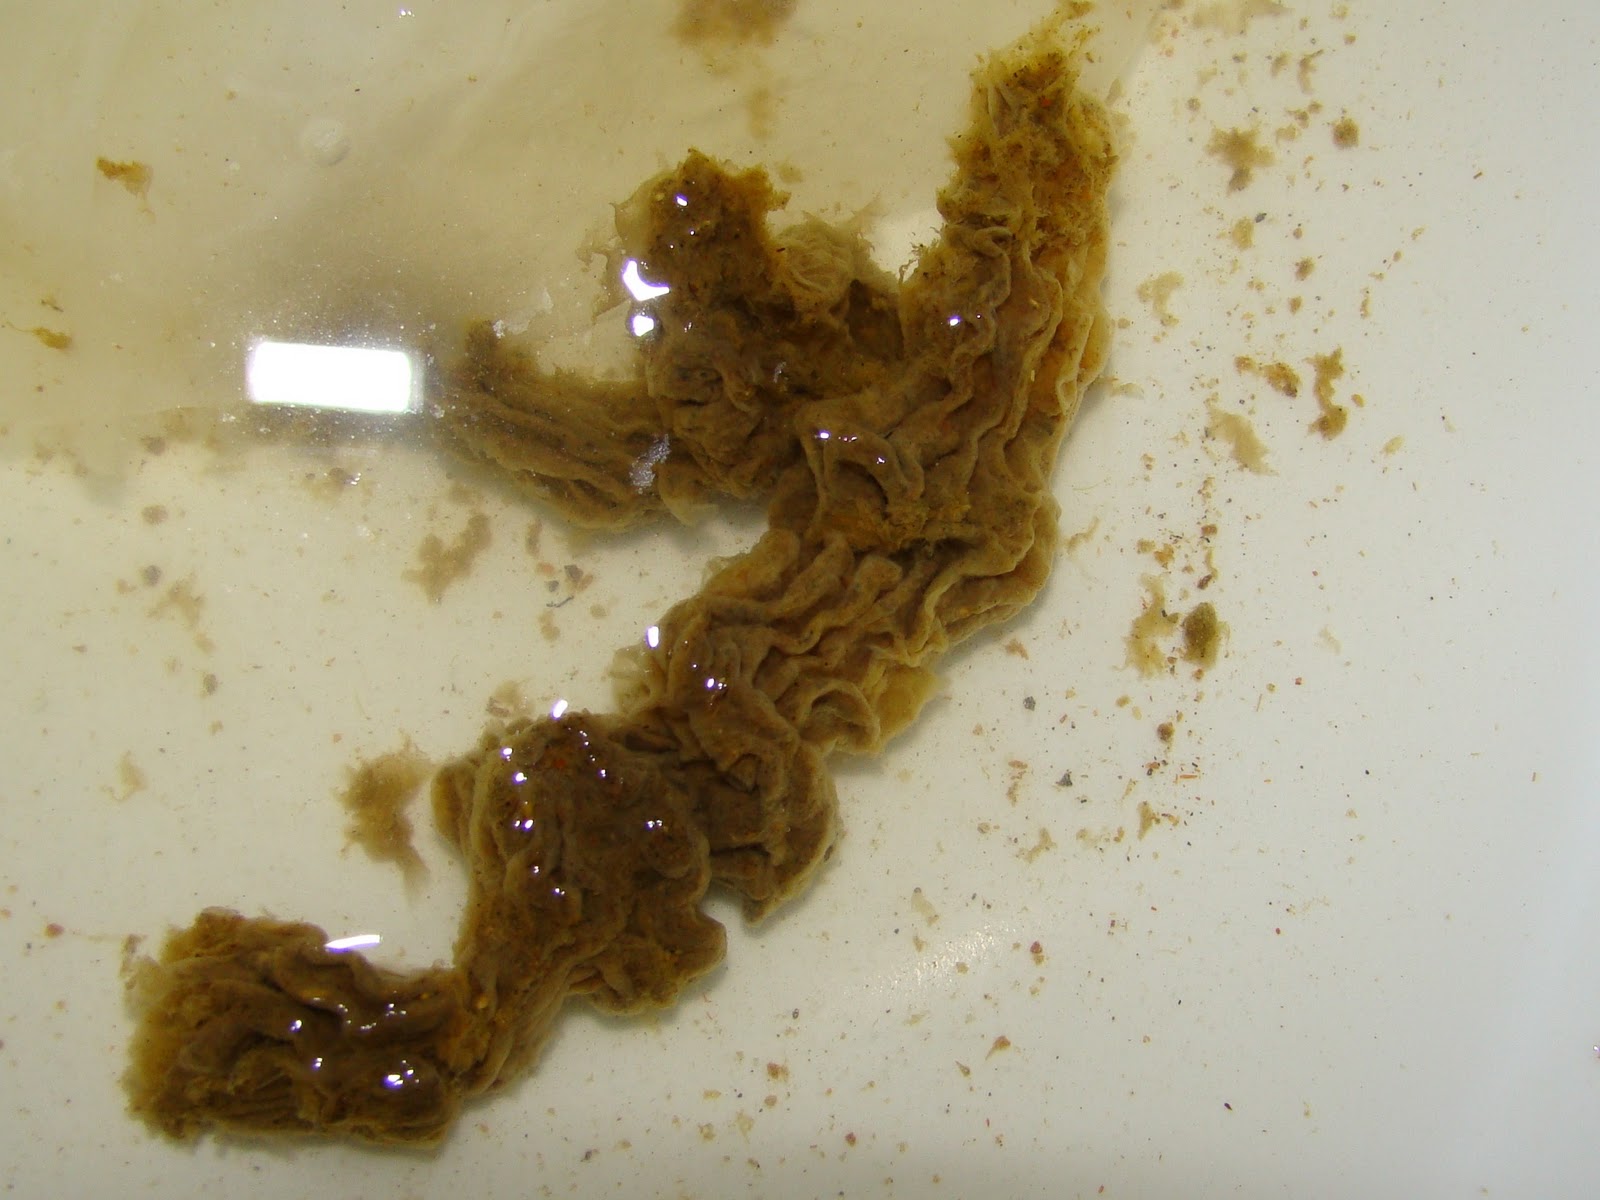 Brown Worms In Stool - Goldenacresdogs.com1600 x 1200